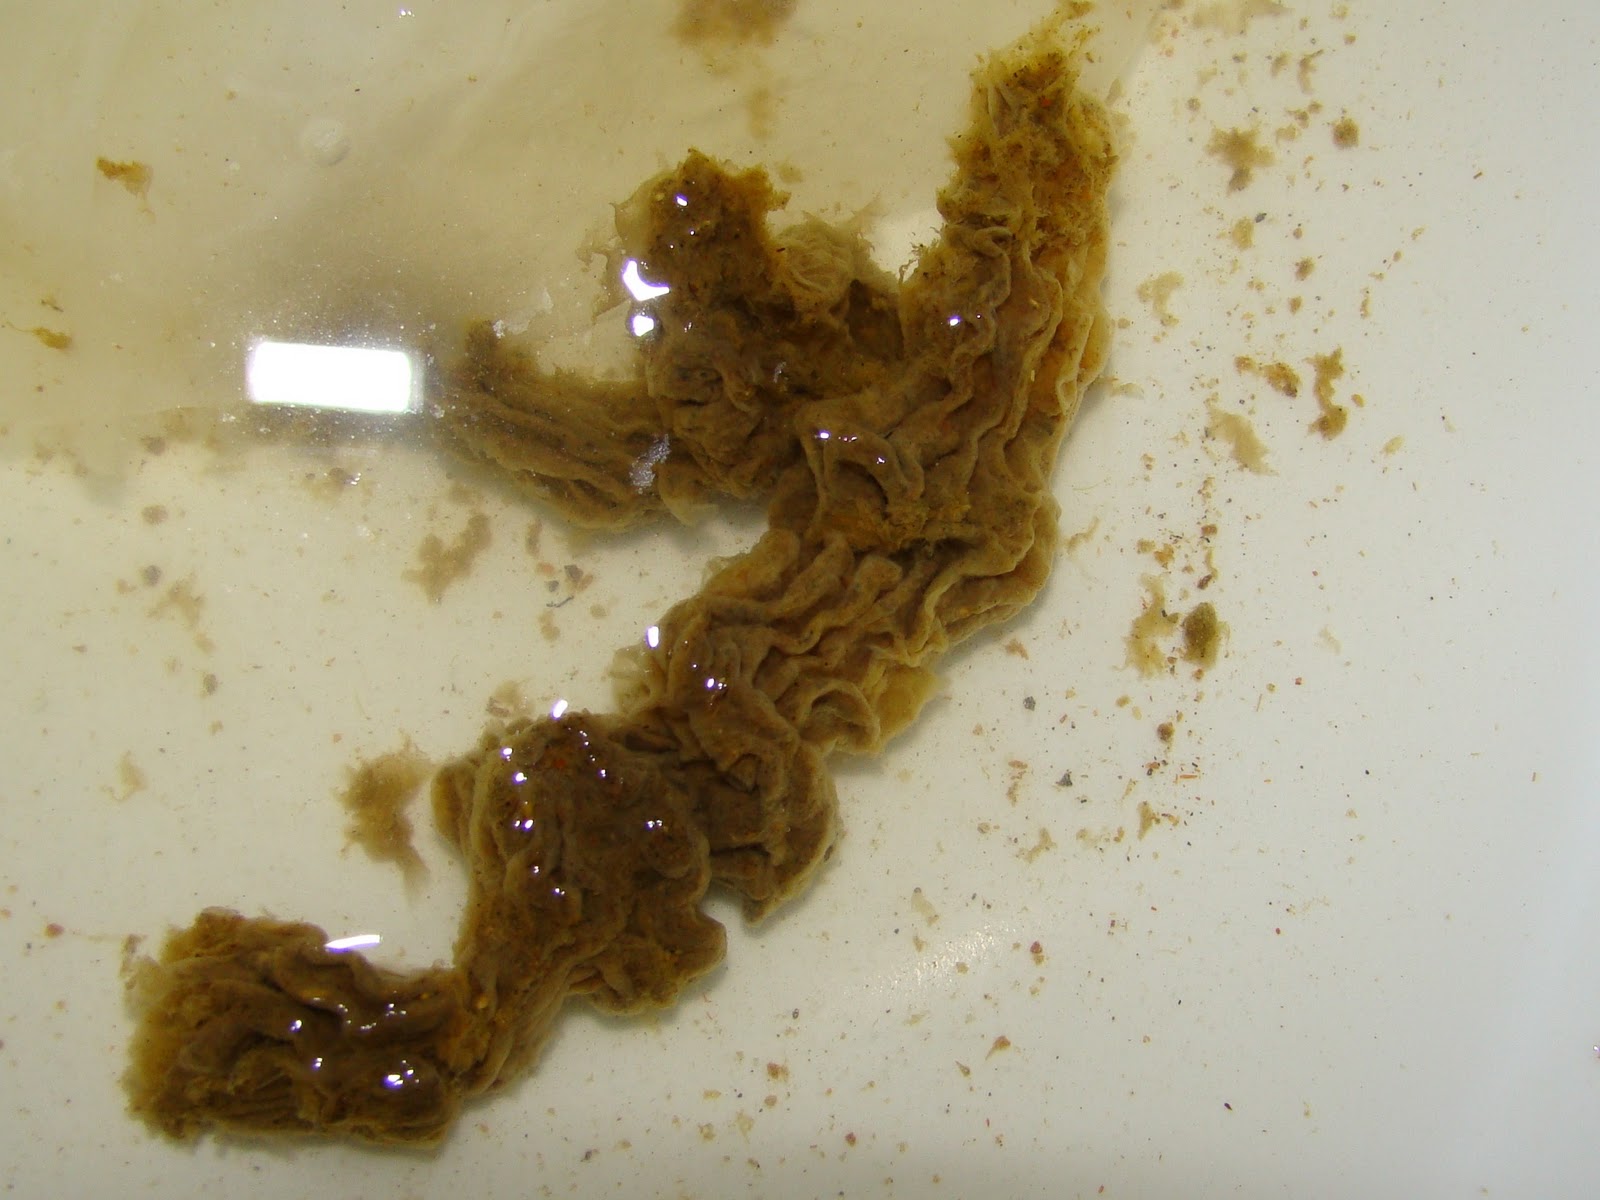 Brown Worms In Stool - Goldenacresdogs.com1600 x 1200